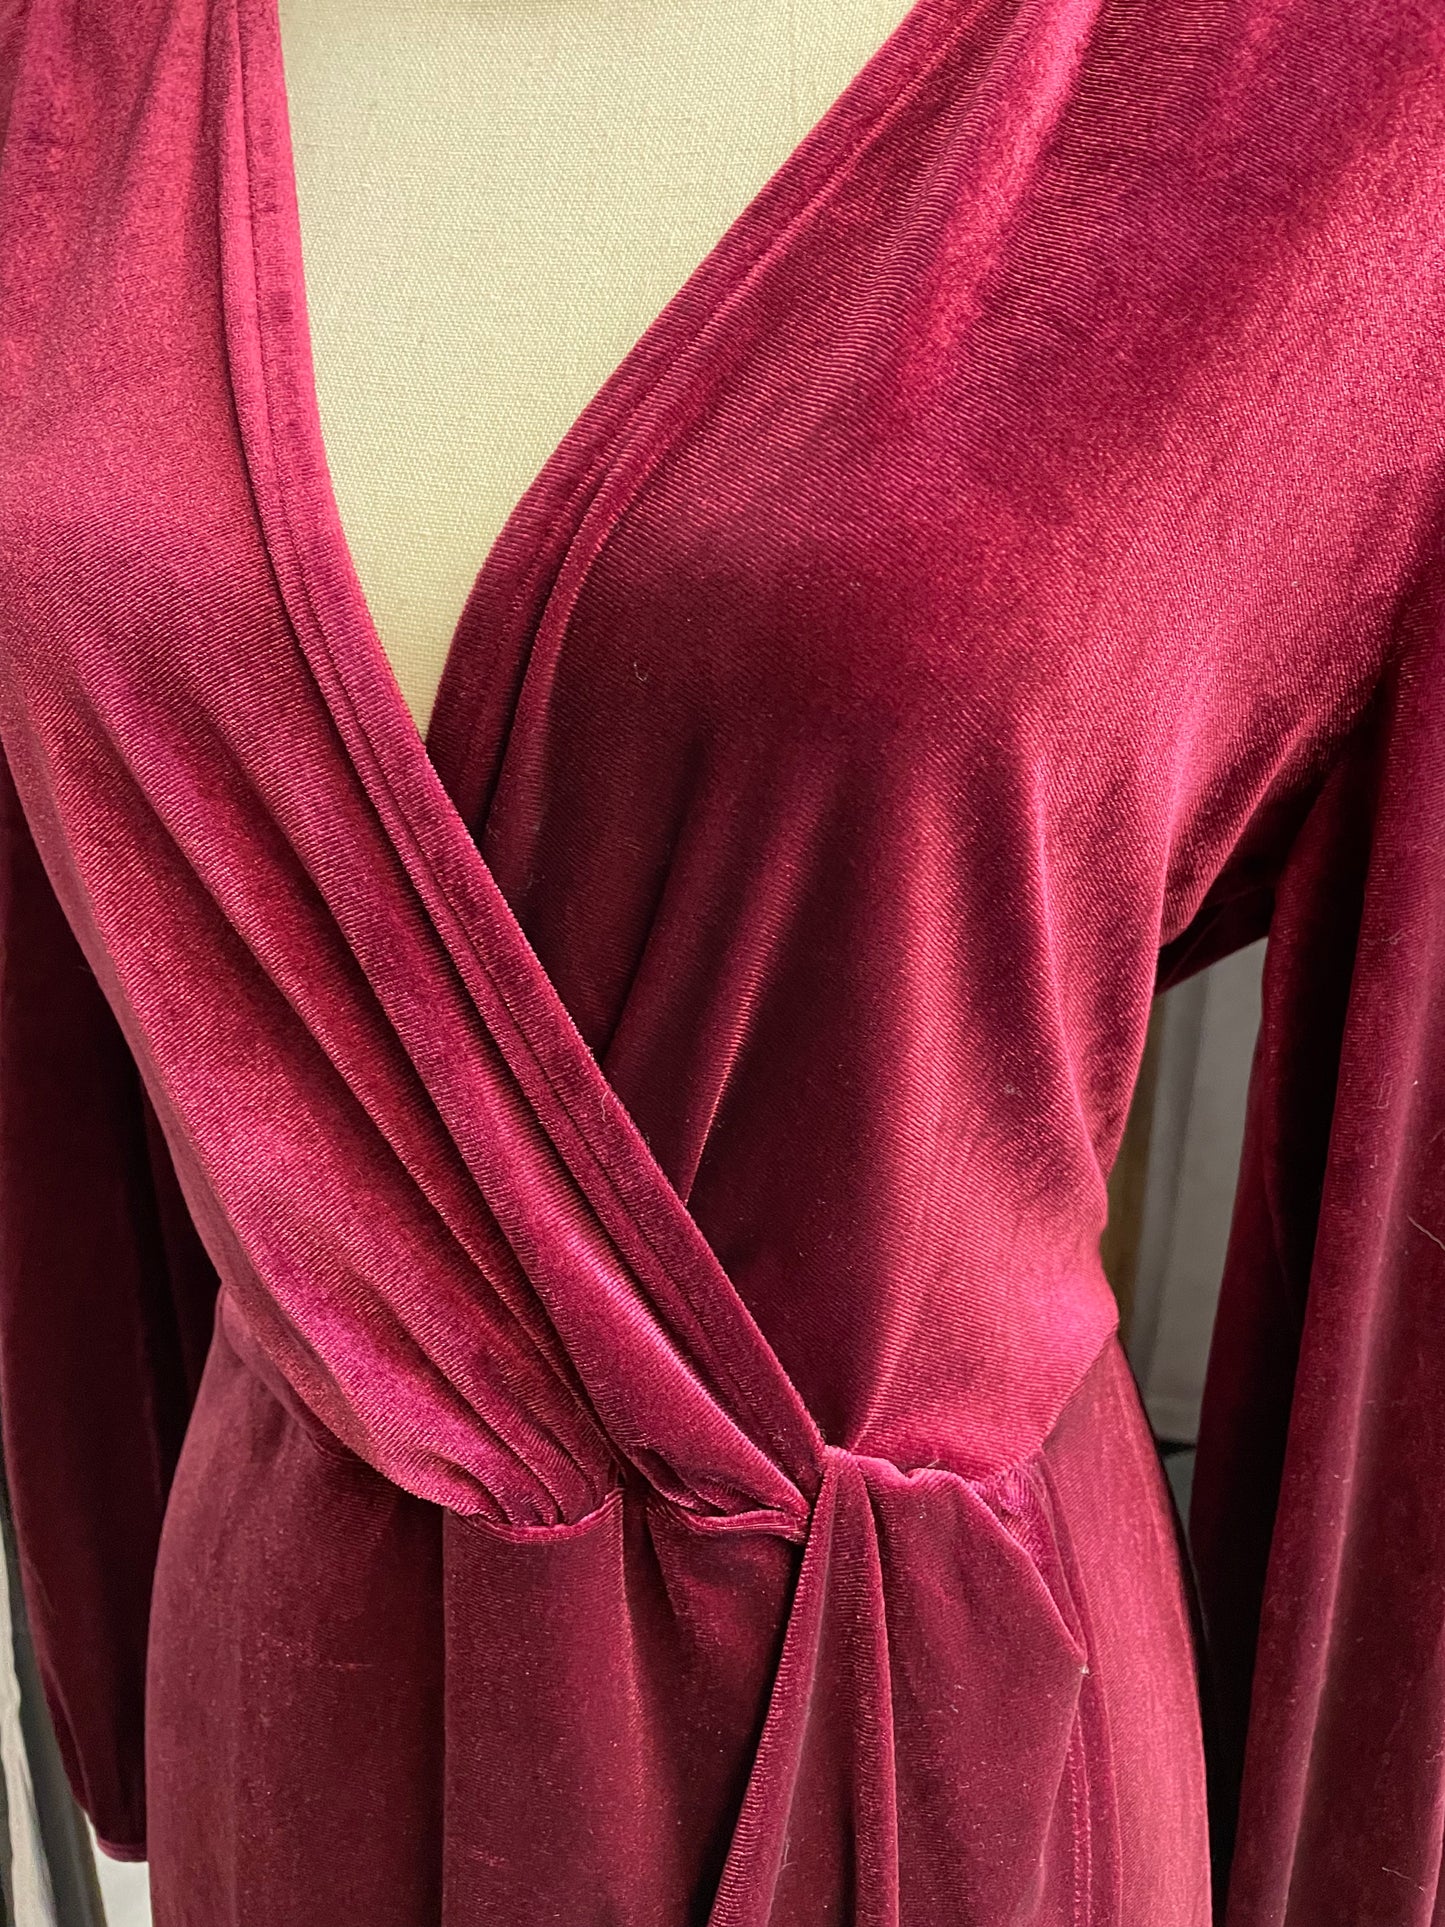 A New Day Velvet Dress (XL)